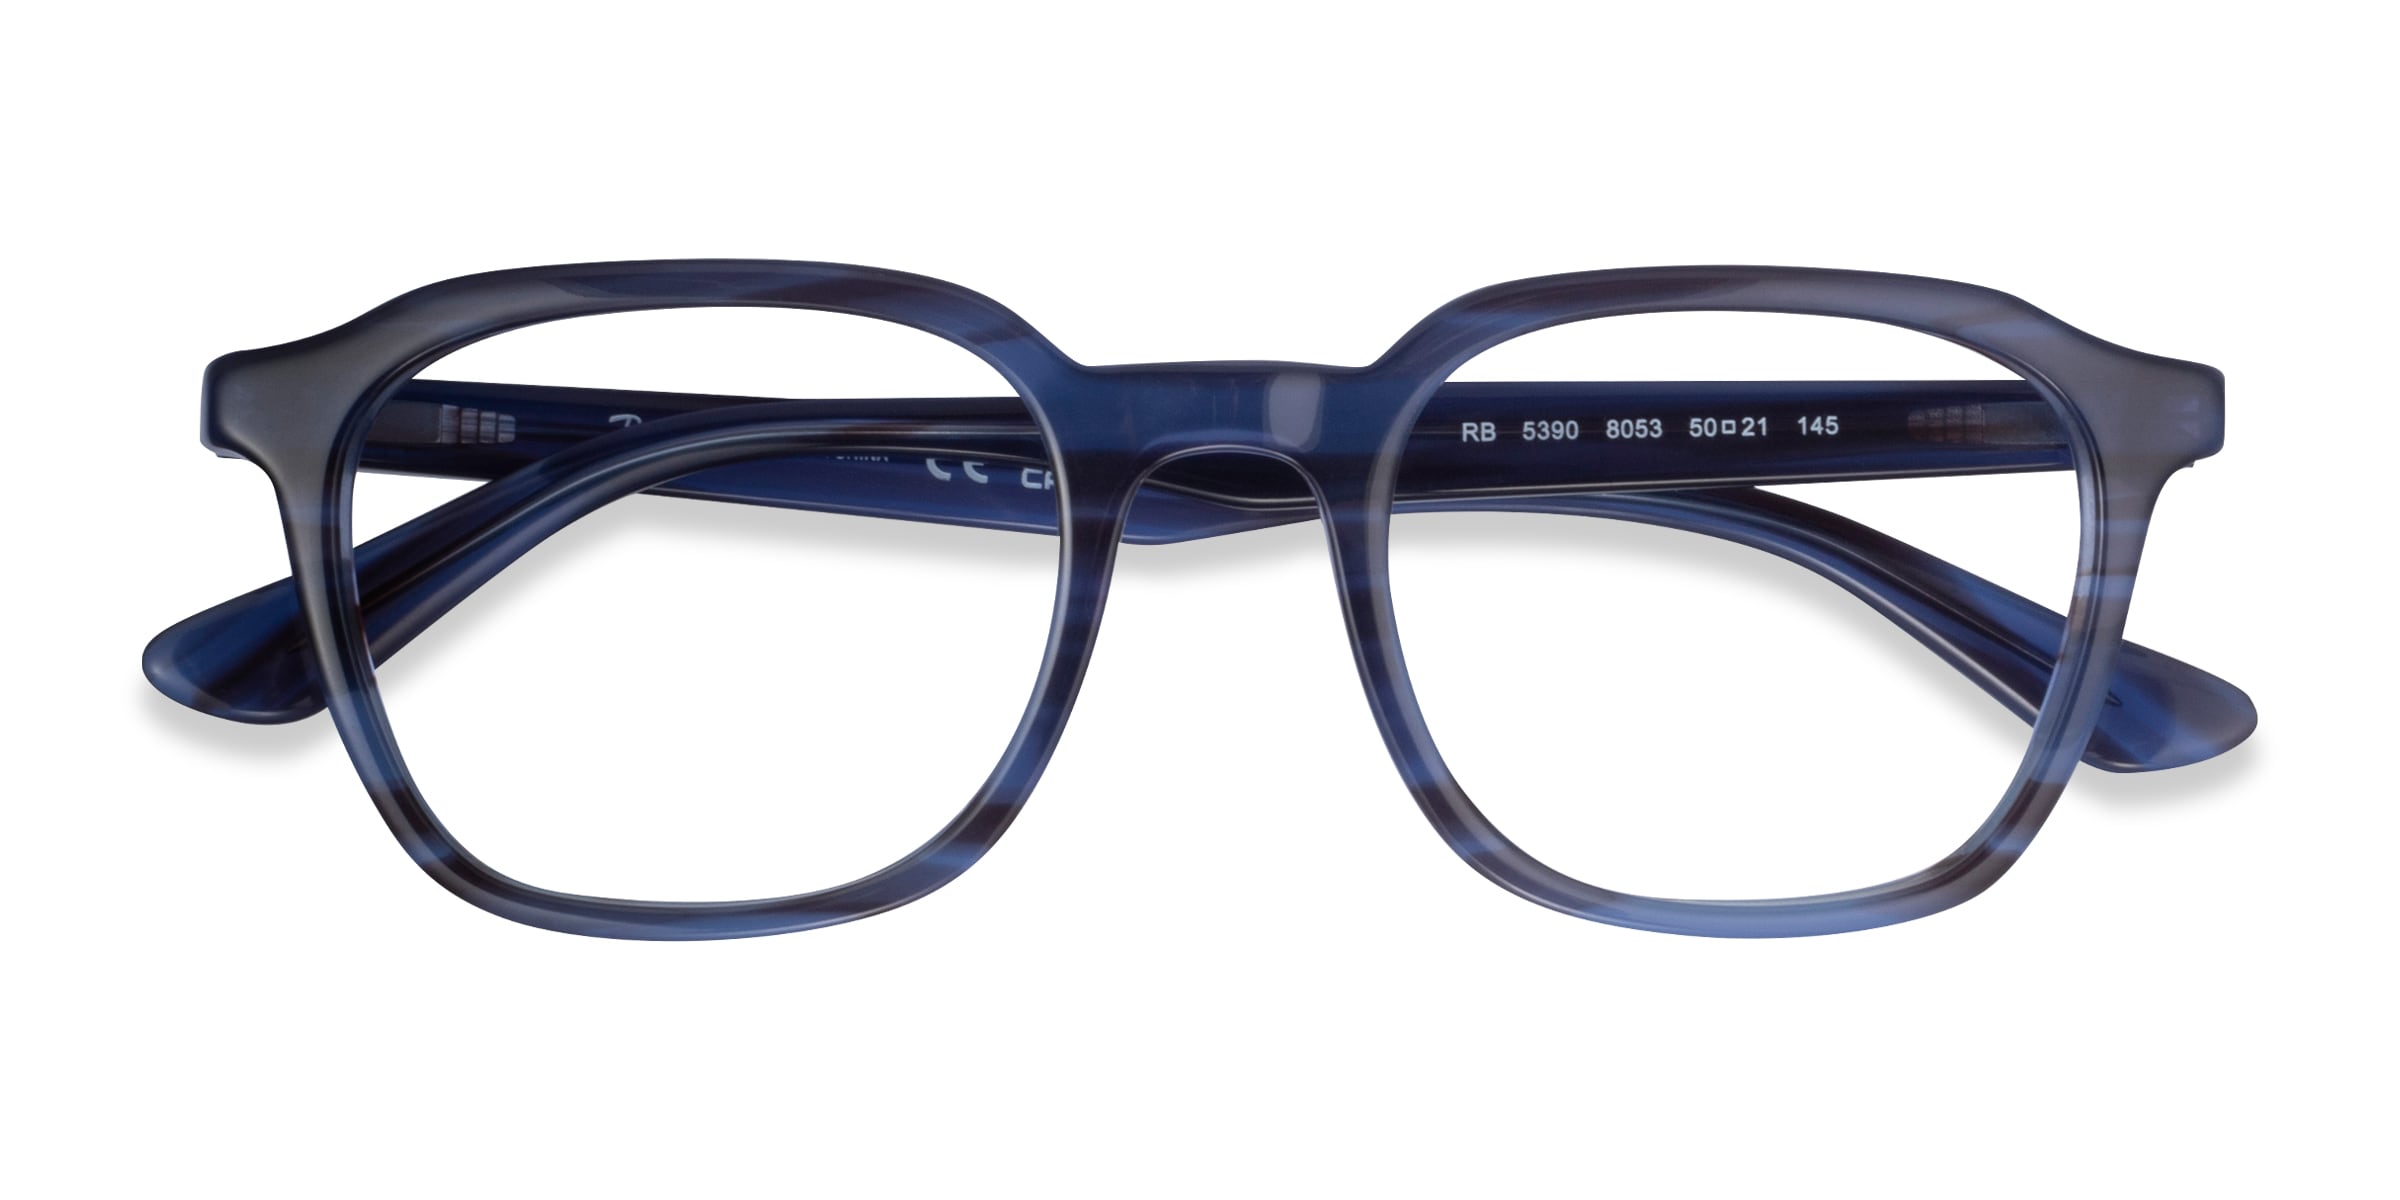 Ray-Ban RB5390 - Square Striped Blue Frame Eyeglasses 